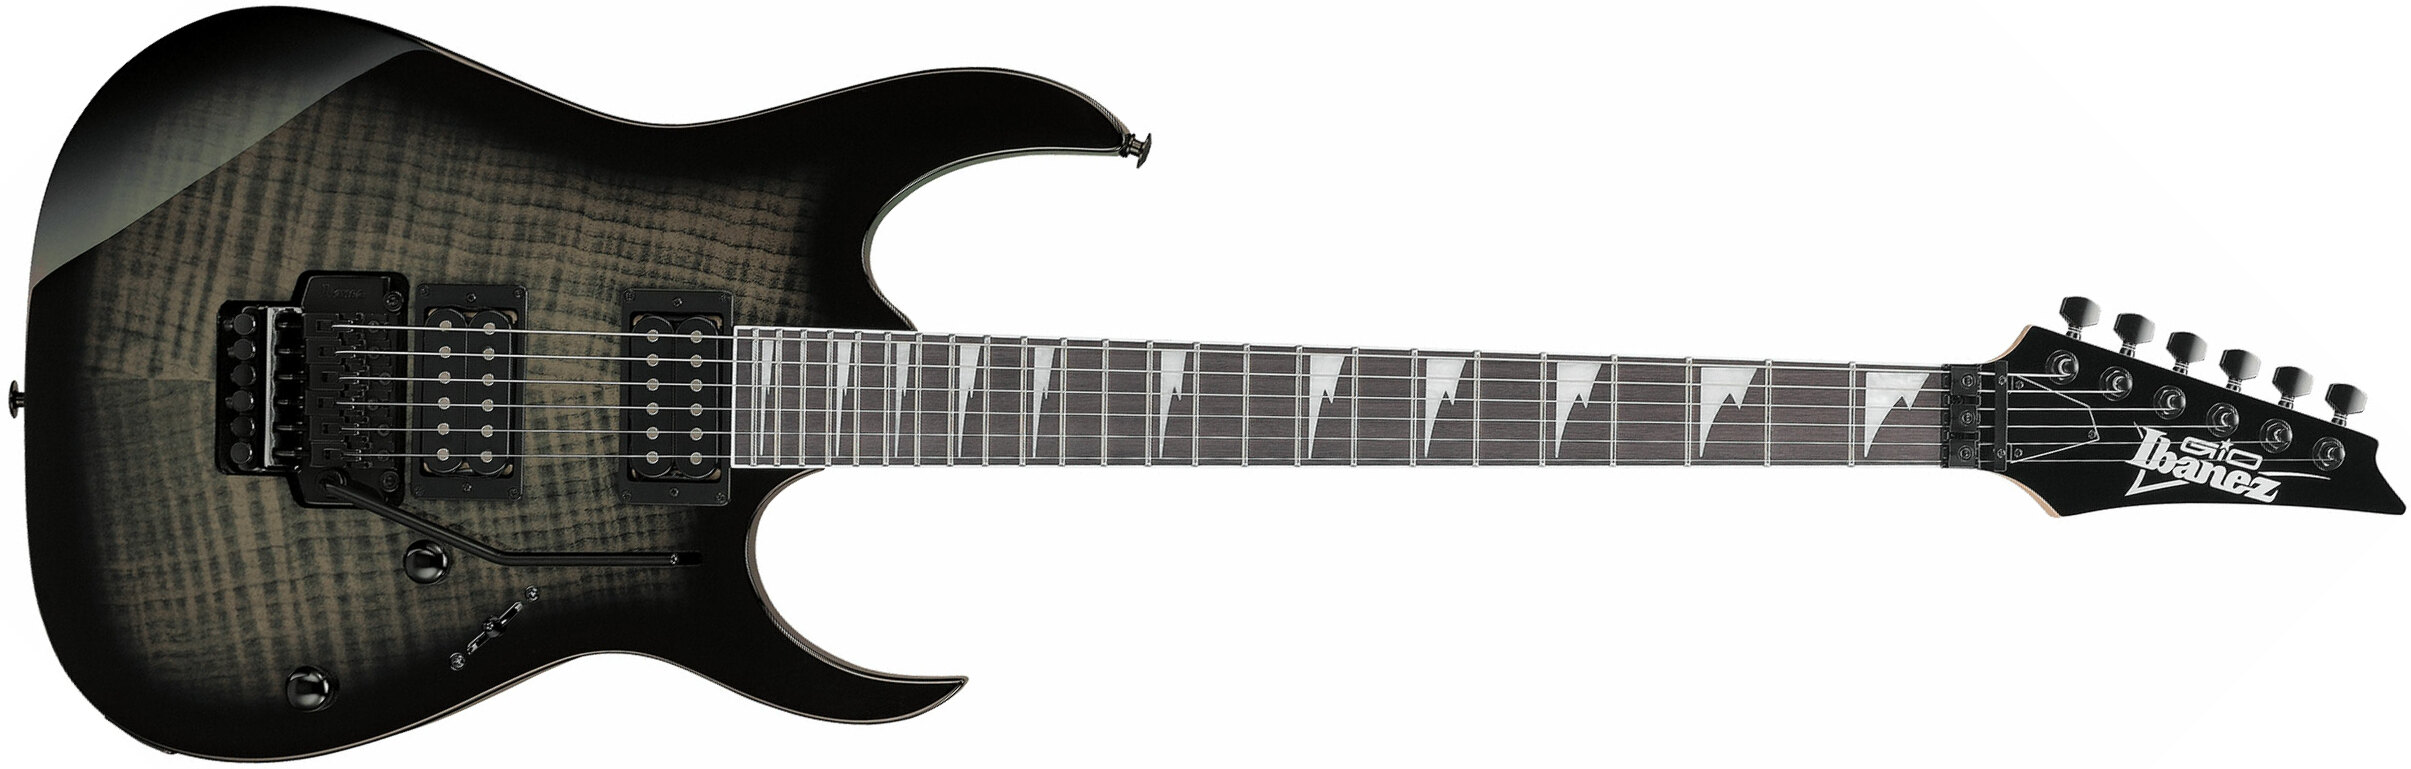 Ibanez Grg320fa Tks Gio 2h Fr Pur - Transparent Black Sunburst - Str shape electric guitar - Main picture